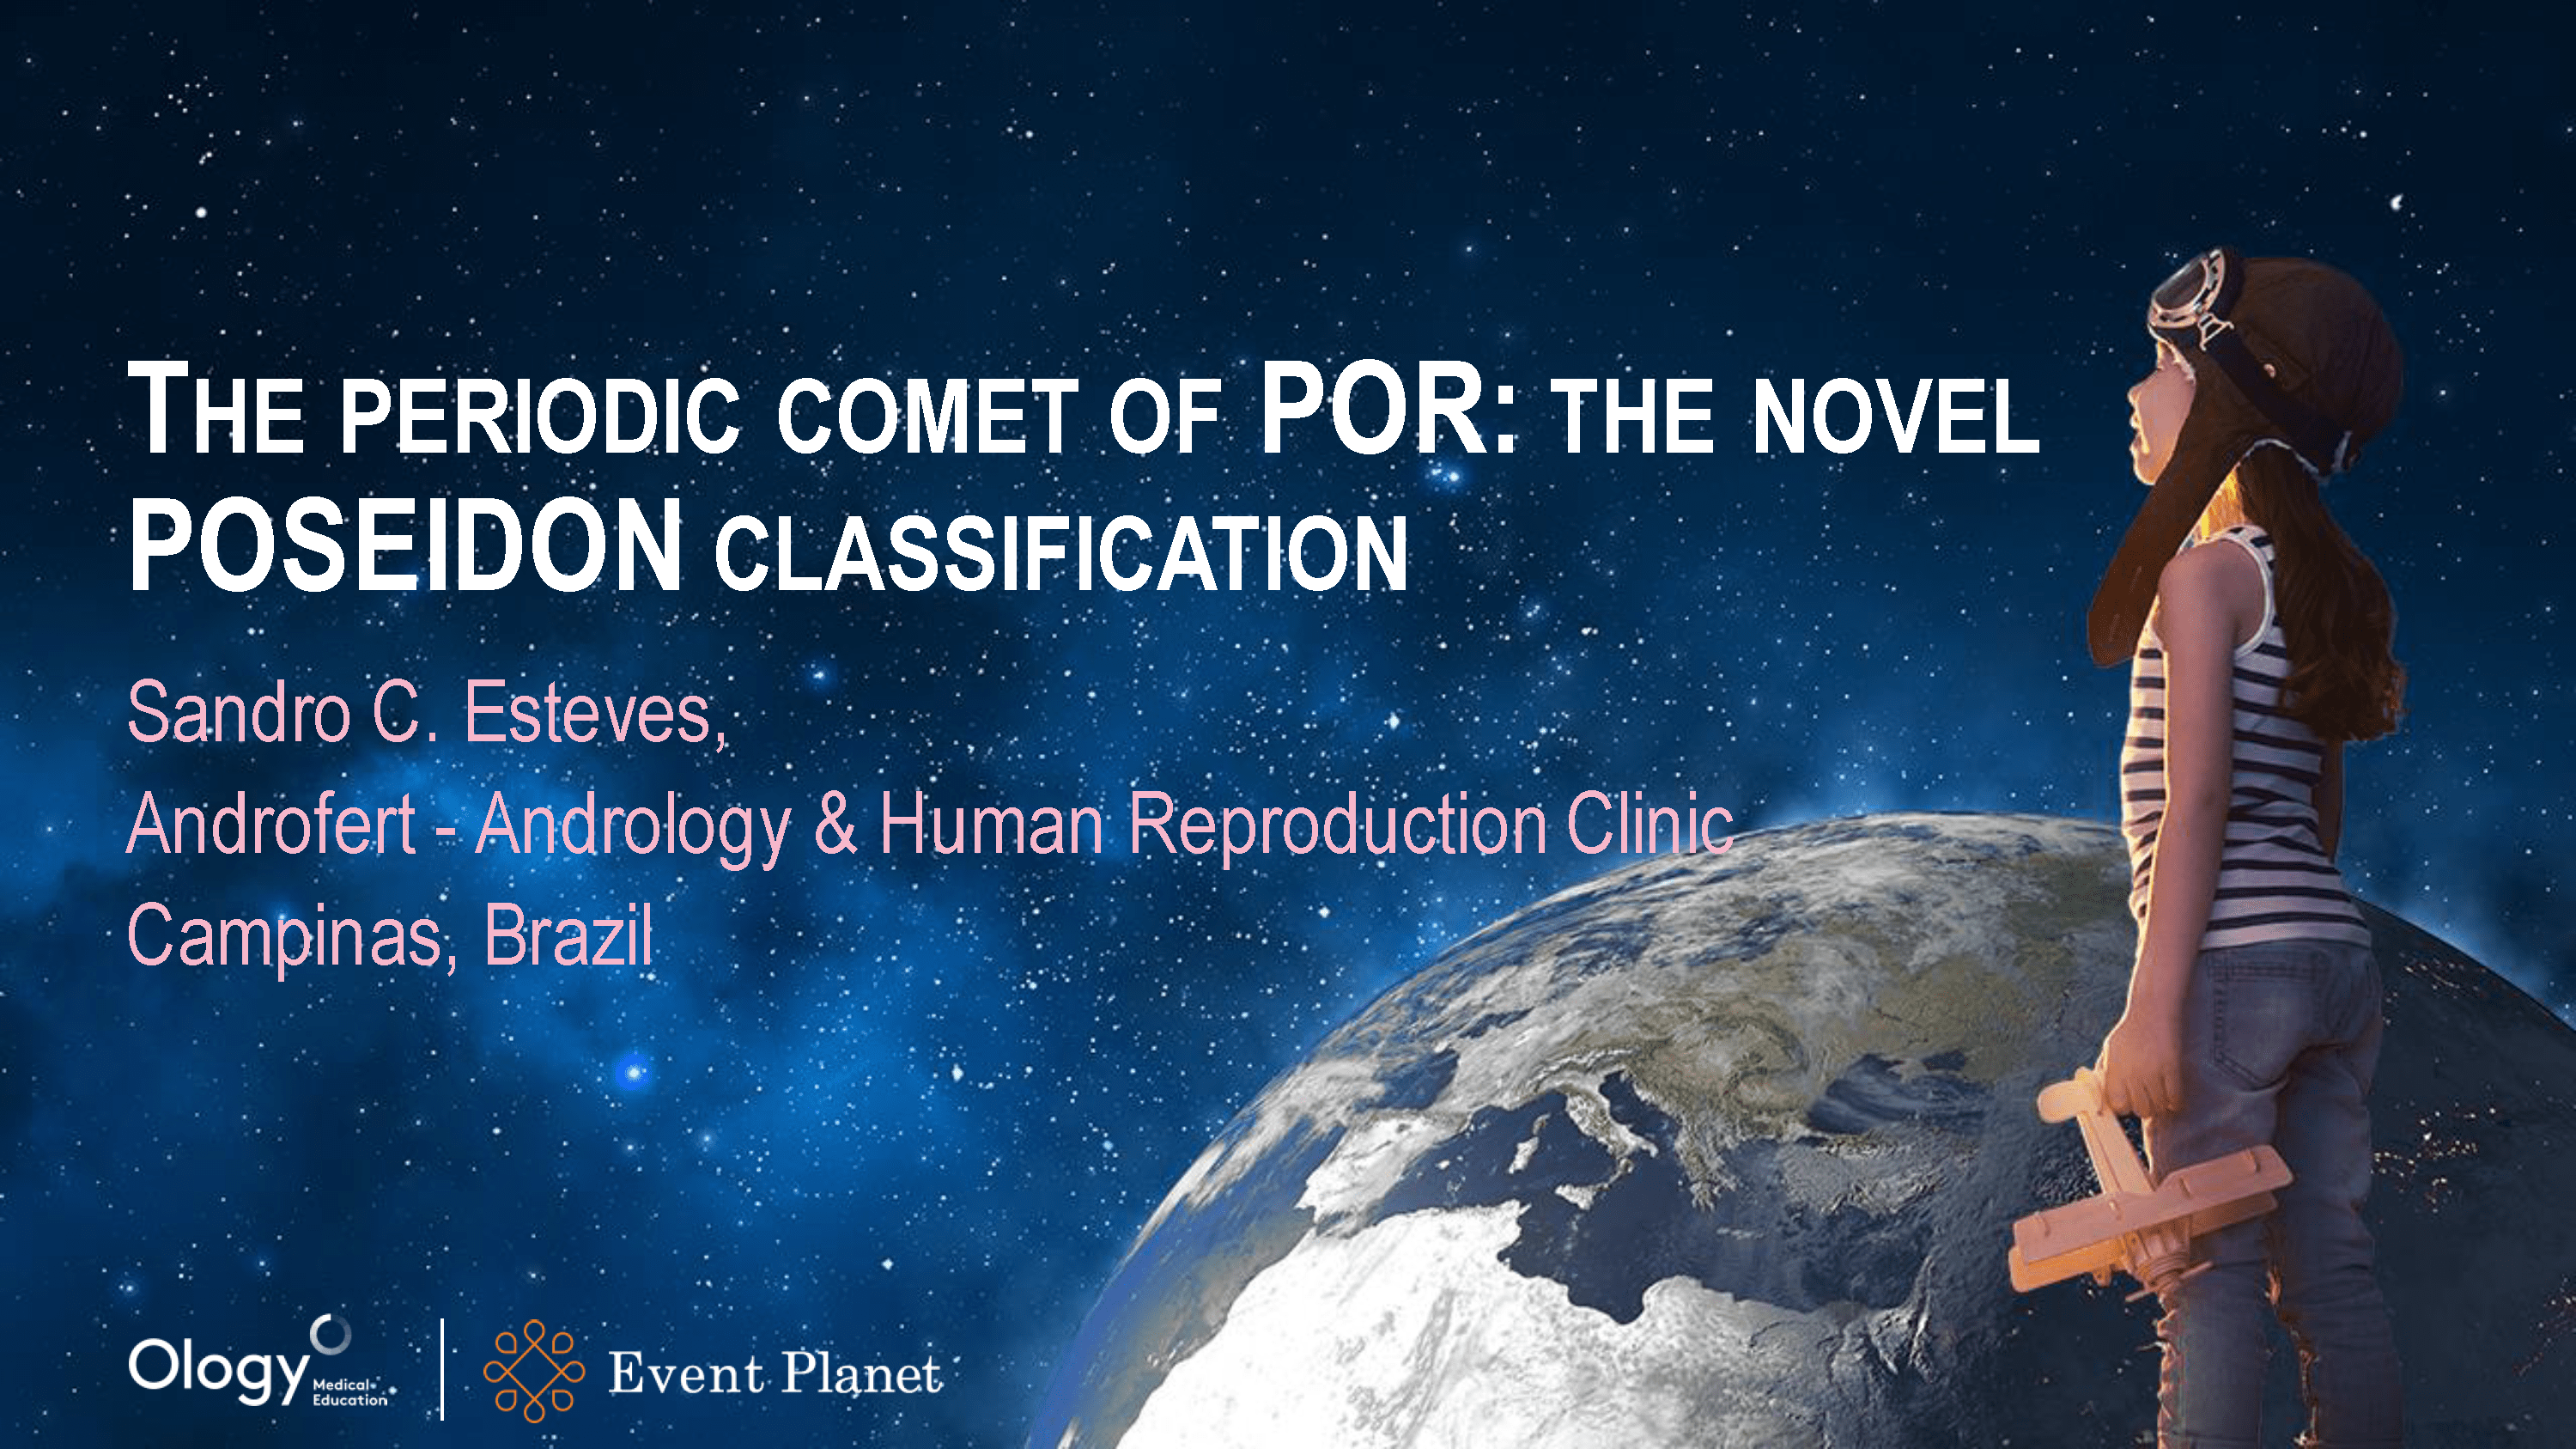 The periodic comet of POR: the novel POSEIDON classification